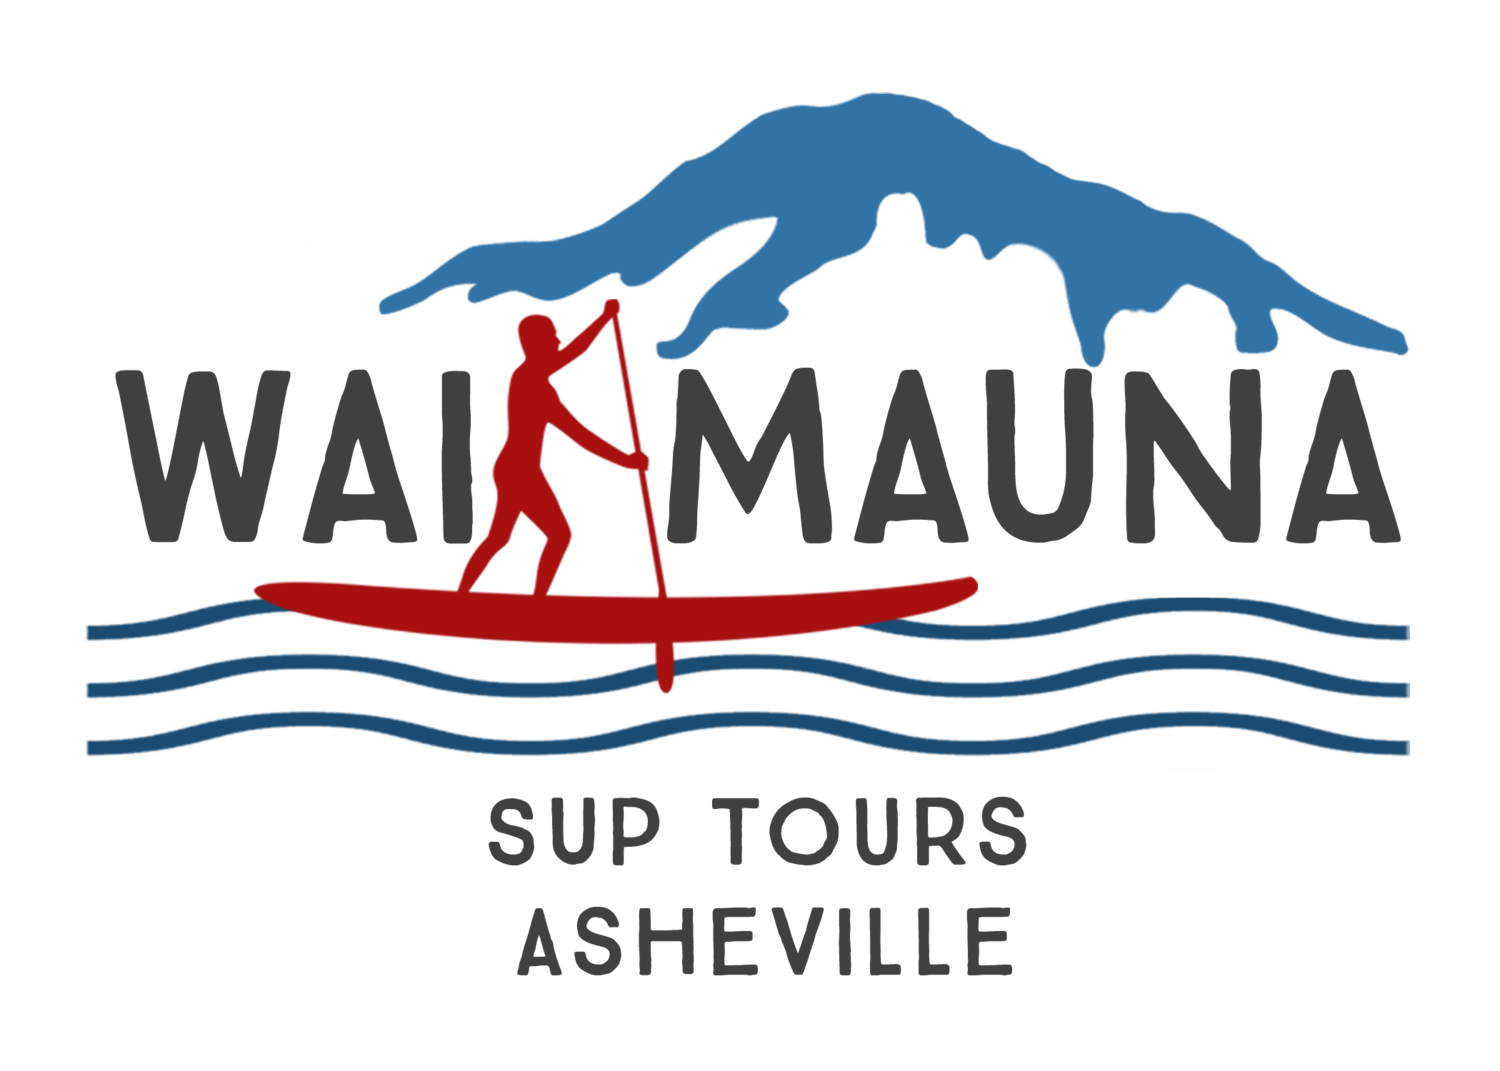 Wai Mauna Asheville SUP Tours